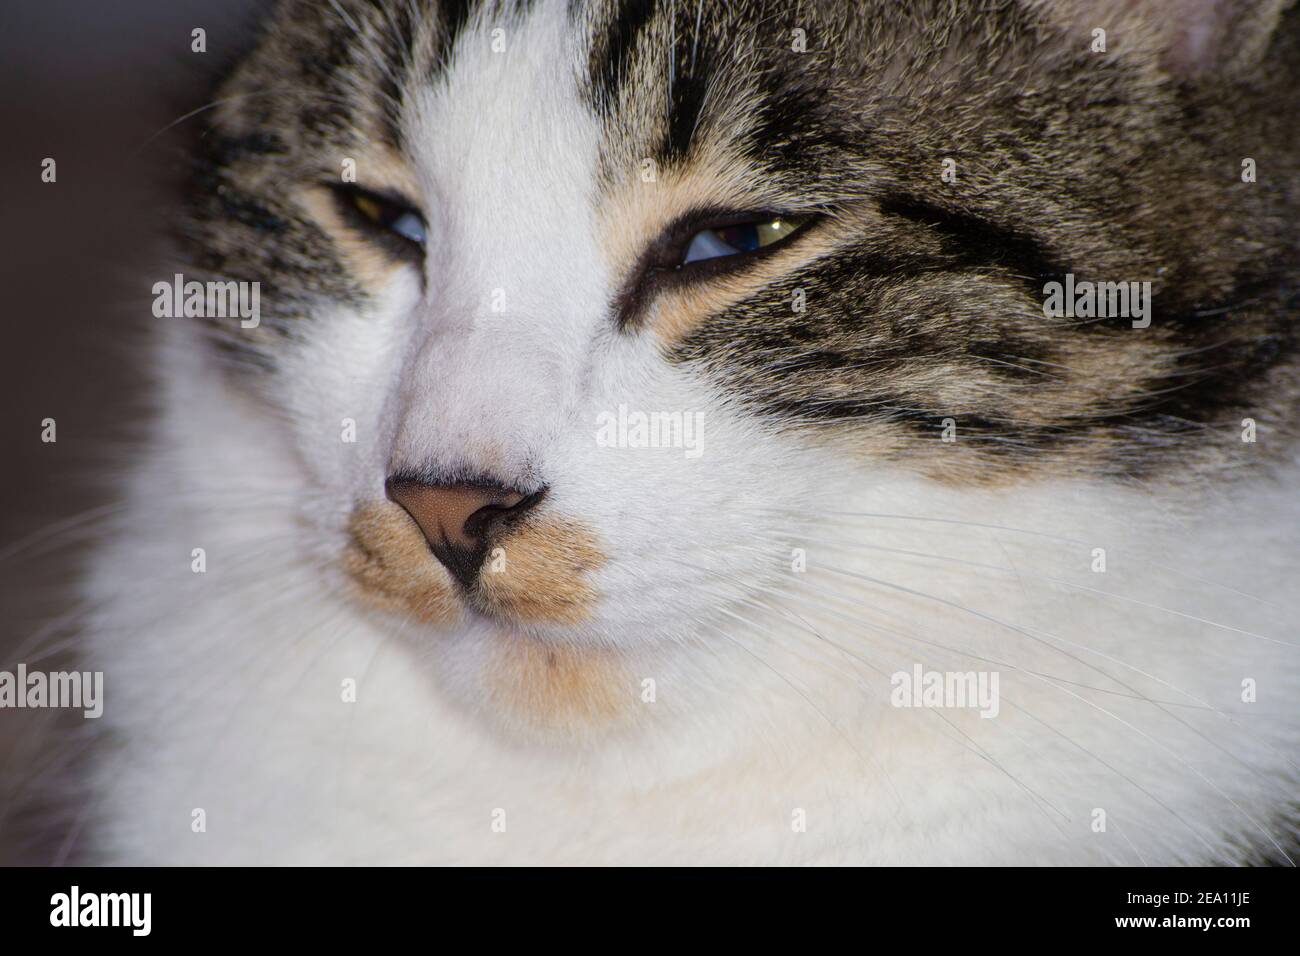 close-up portrait of a sleepy tabby cat Stock Photo